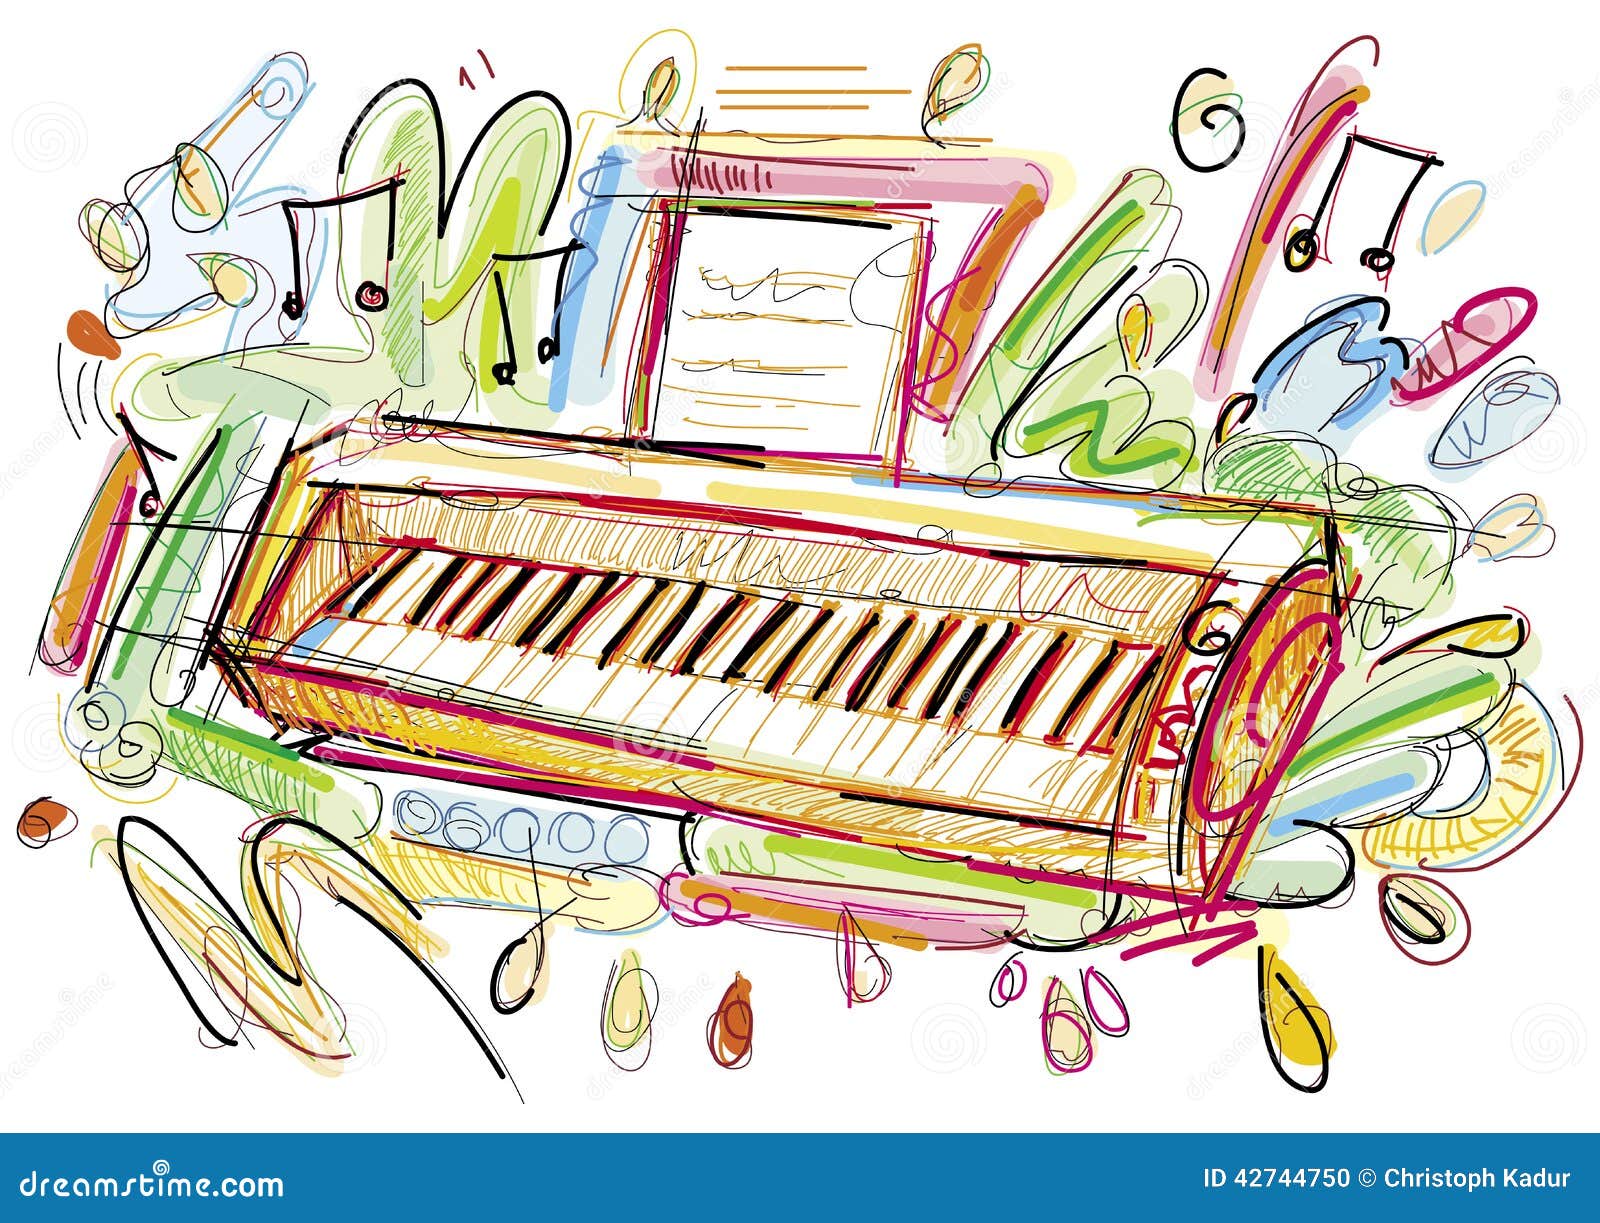 Рисунок на тему пианино